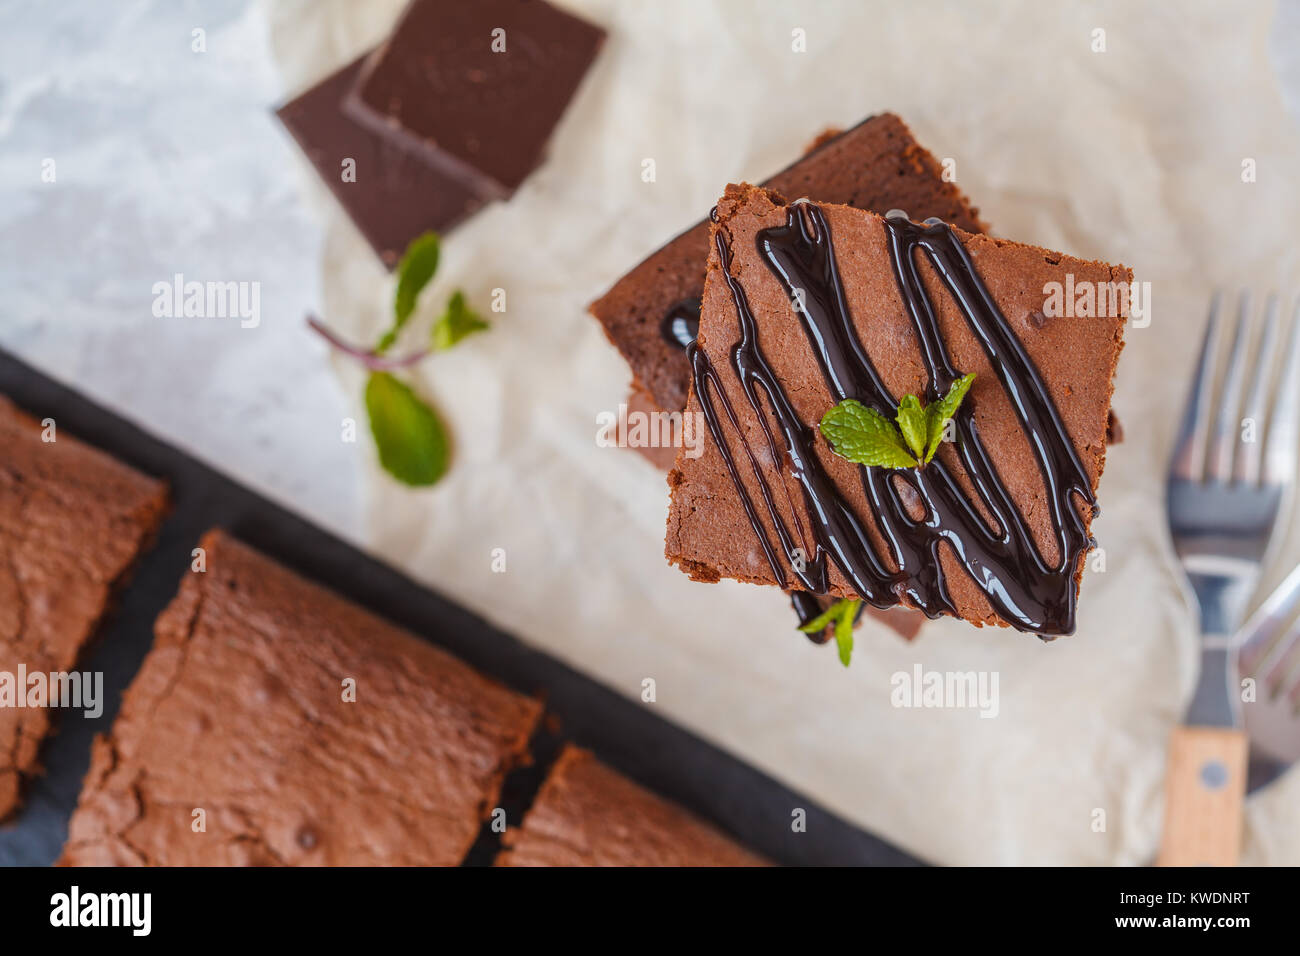 Pieces of healthy vegan pumpkin chocolate brownie with chocolate (carob) syrup on slate board Stock Photo